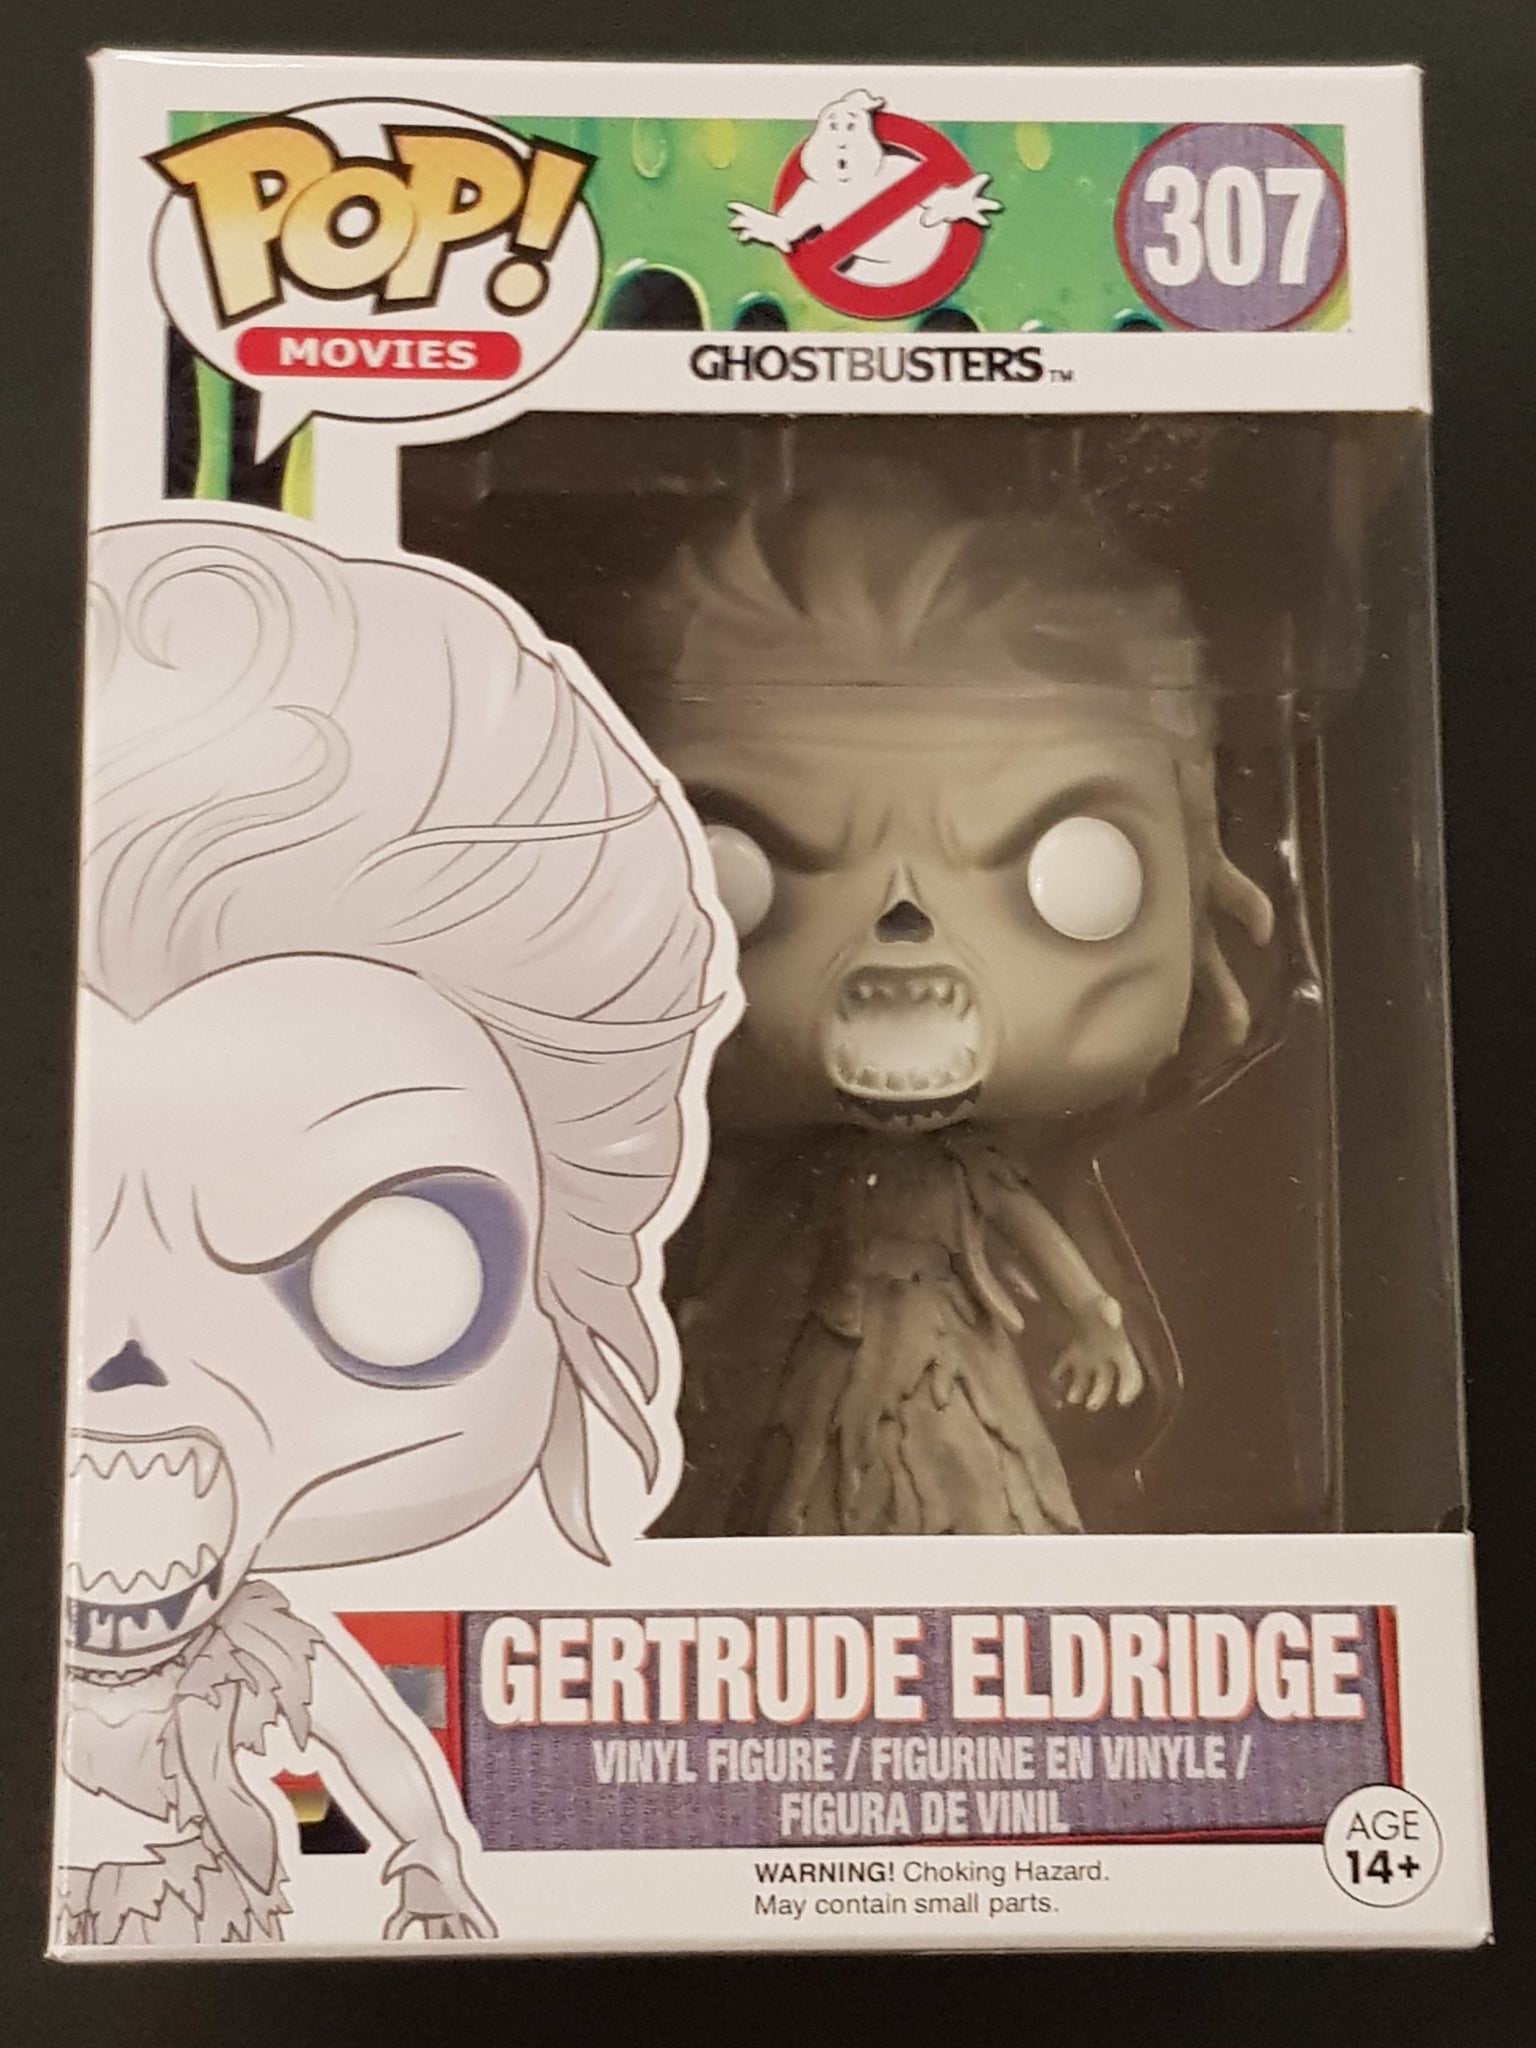 Funko Pop! Ghostbusters Gertrude Eldridge #307 Vinyl Figure